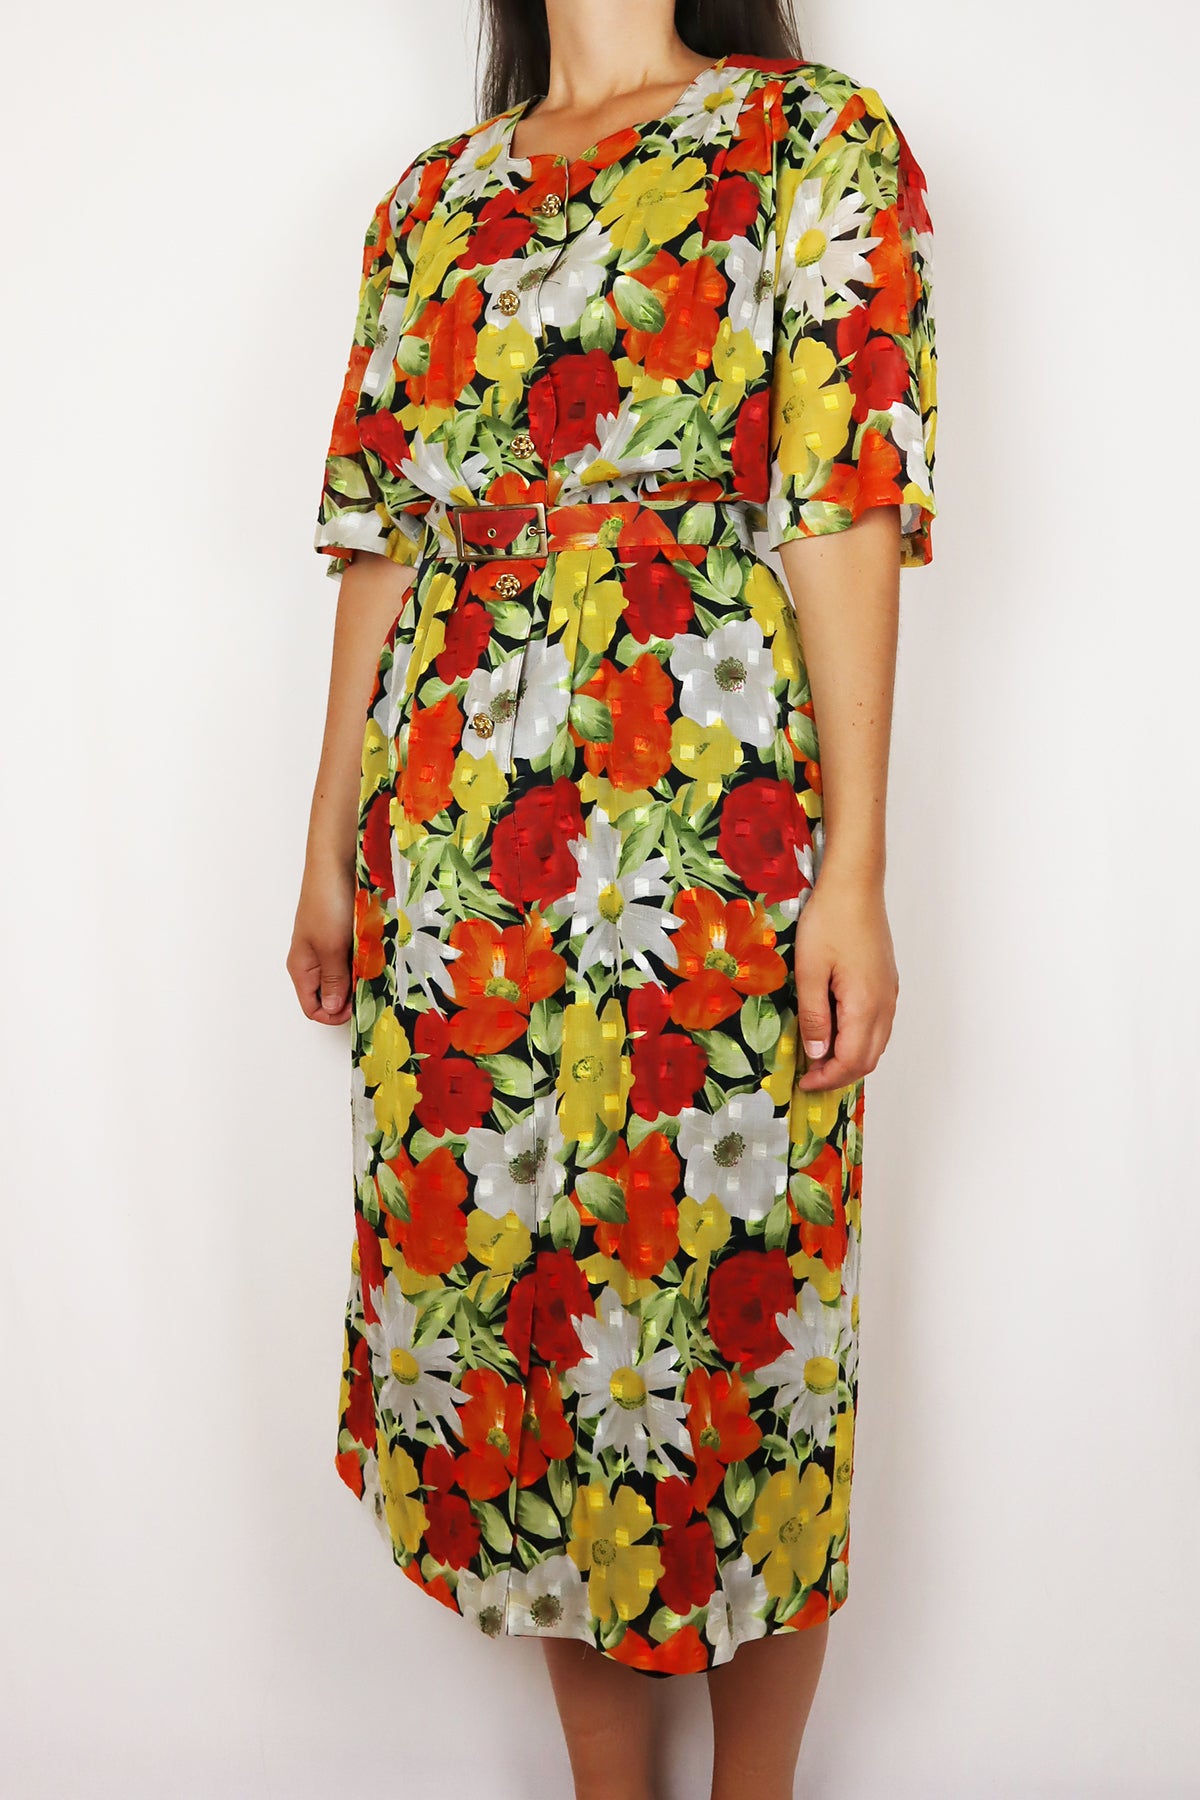 Kleid Vintage Blumenwiese Gelb ( Gr. M/L )